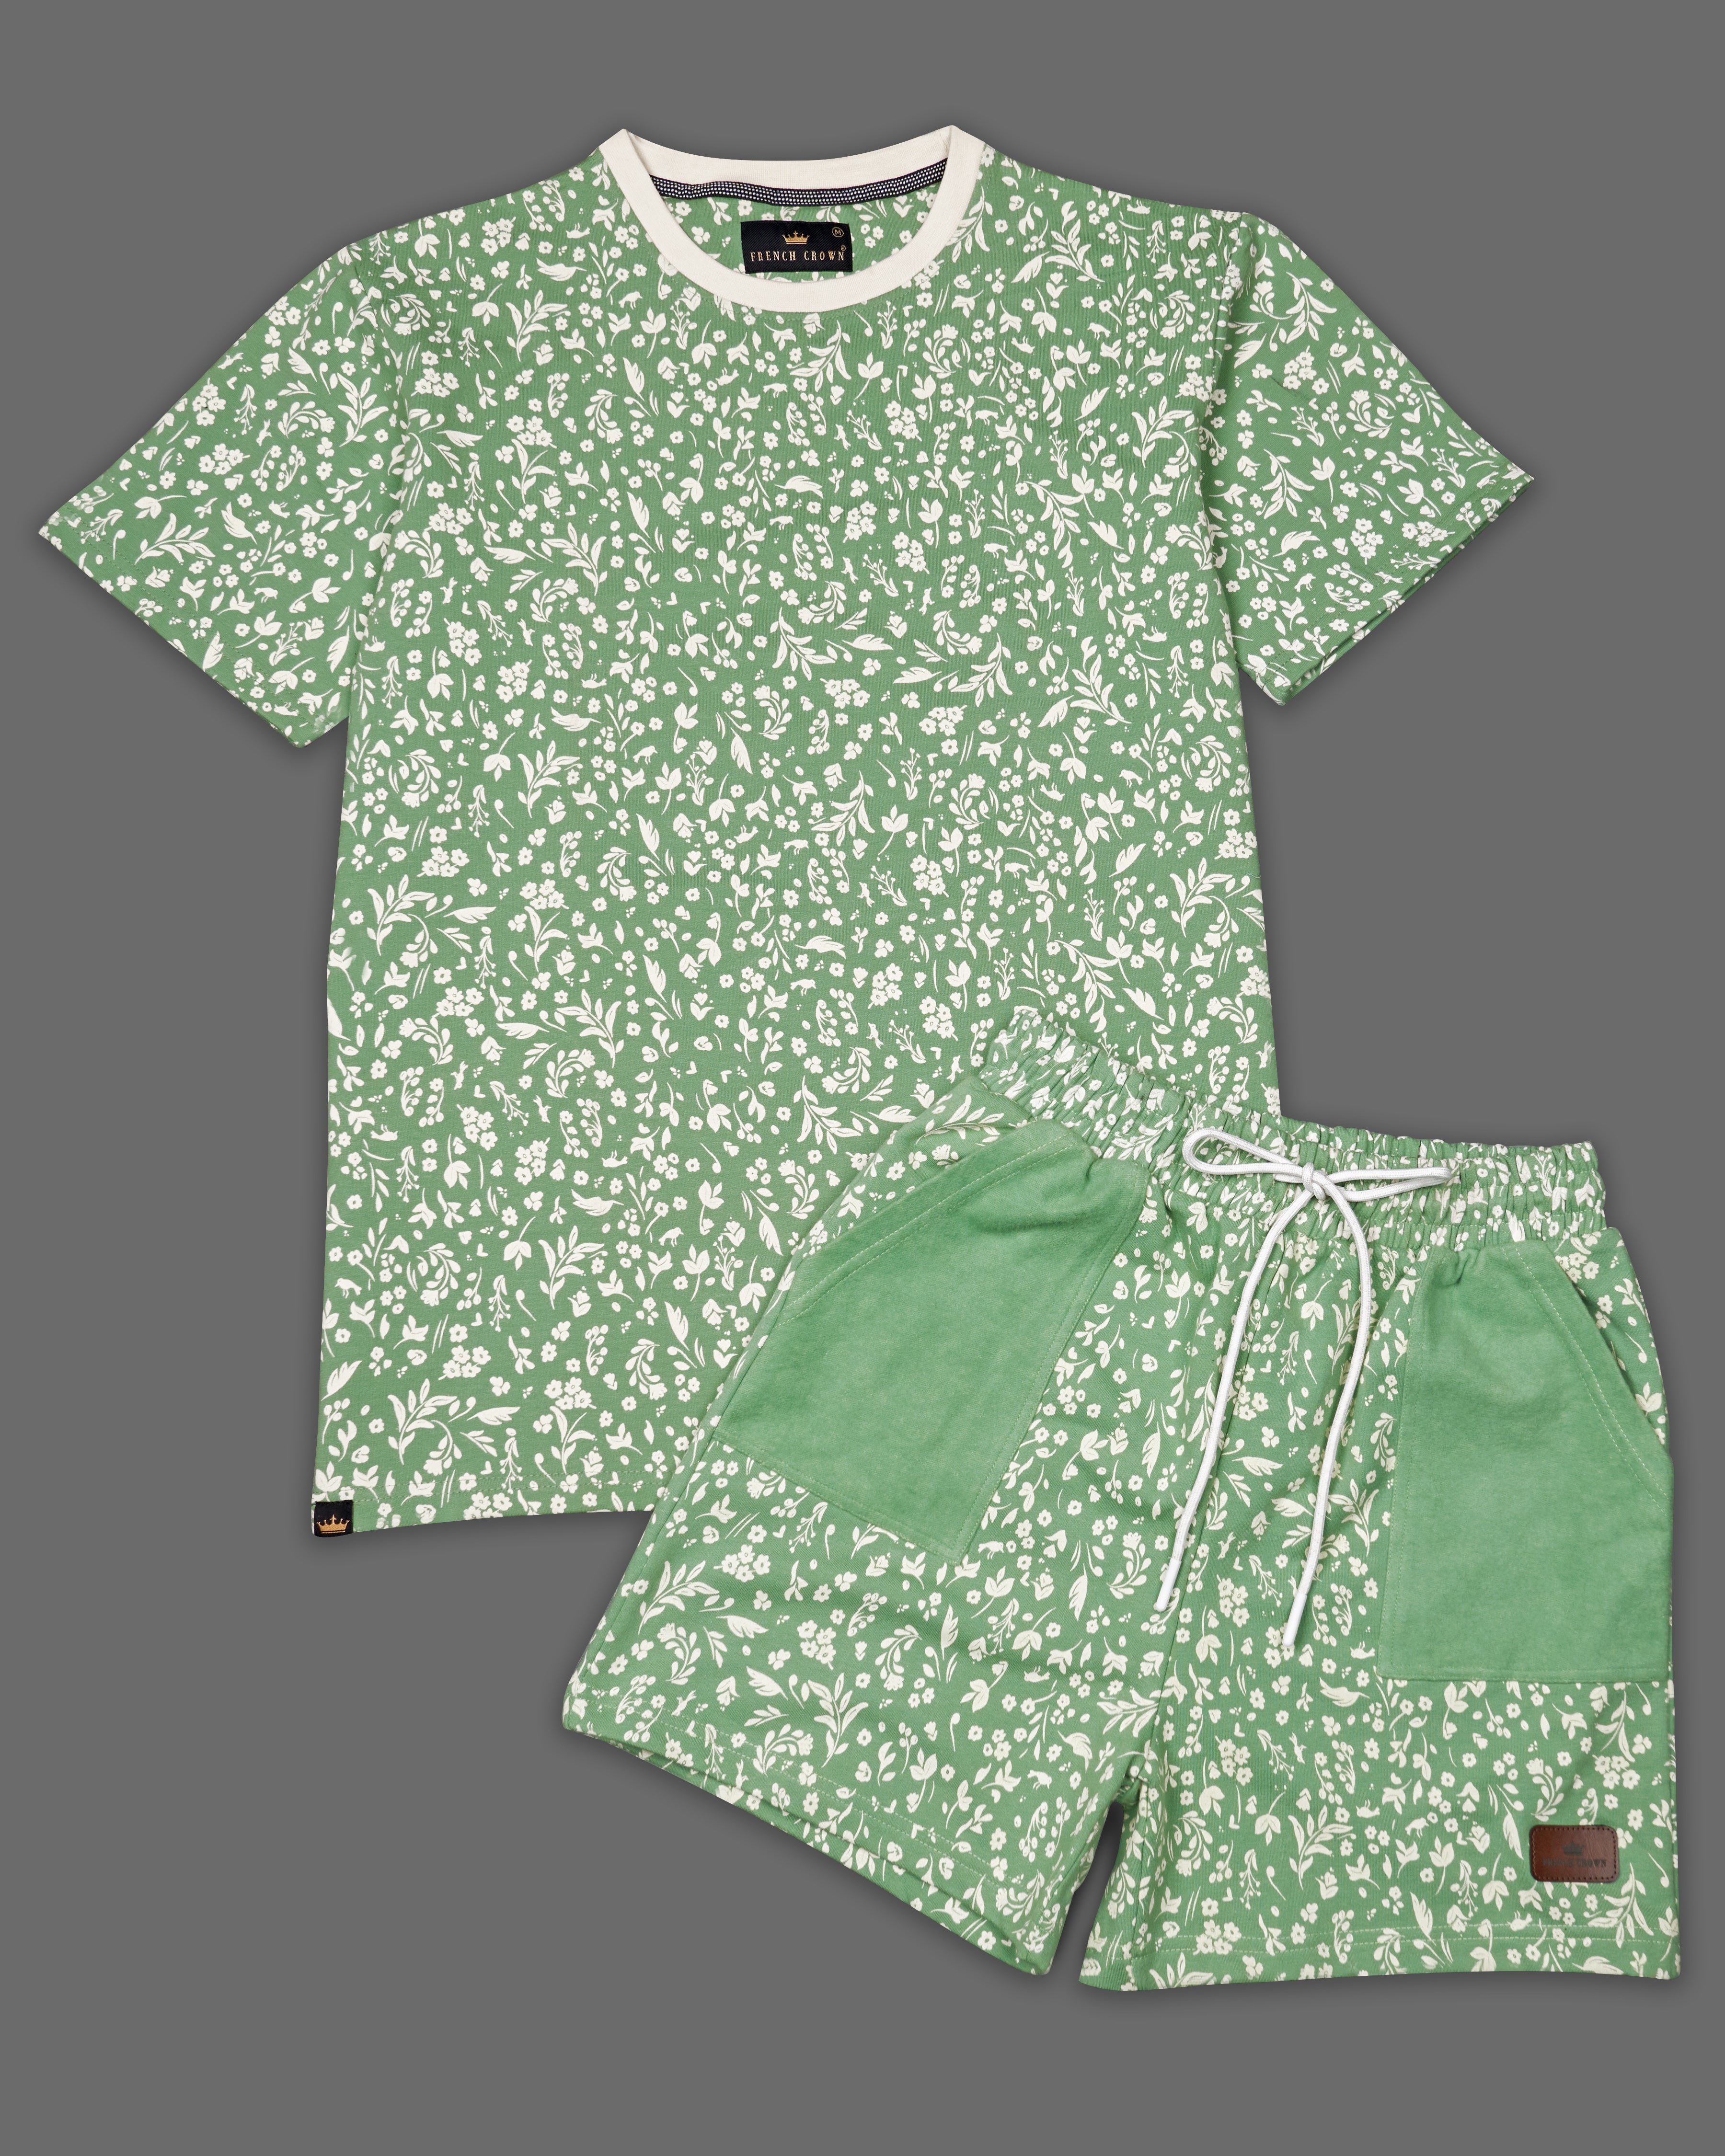 Lichen Green Ditsy Printed Organic Cotton T-shirt with Premium Cotton Shorts Combo TS660-SR184-S, TS660-SR184-M, TS660-SR184-L, TS660-SR184-XL, TS660-SR184-XXL